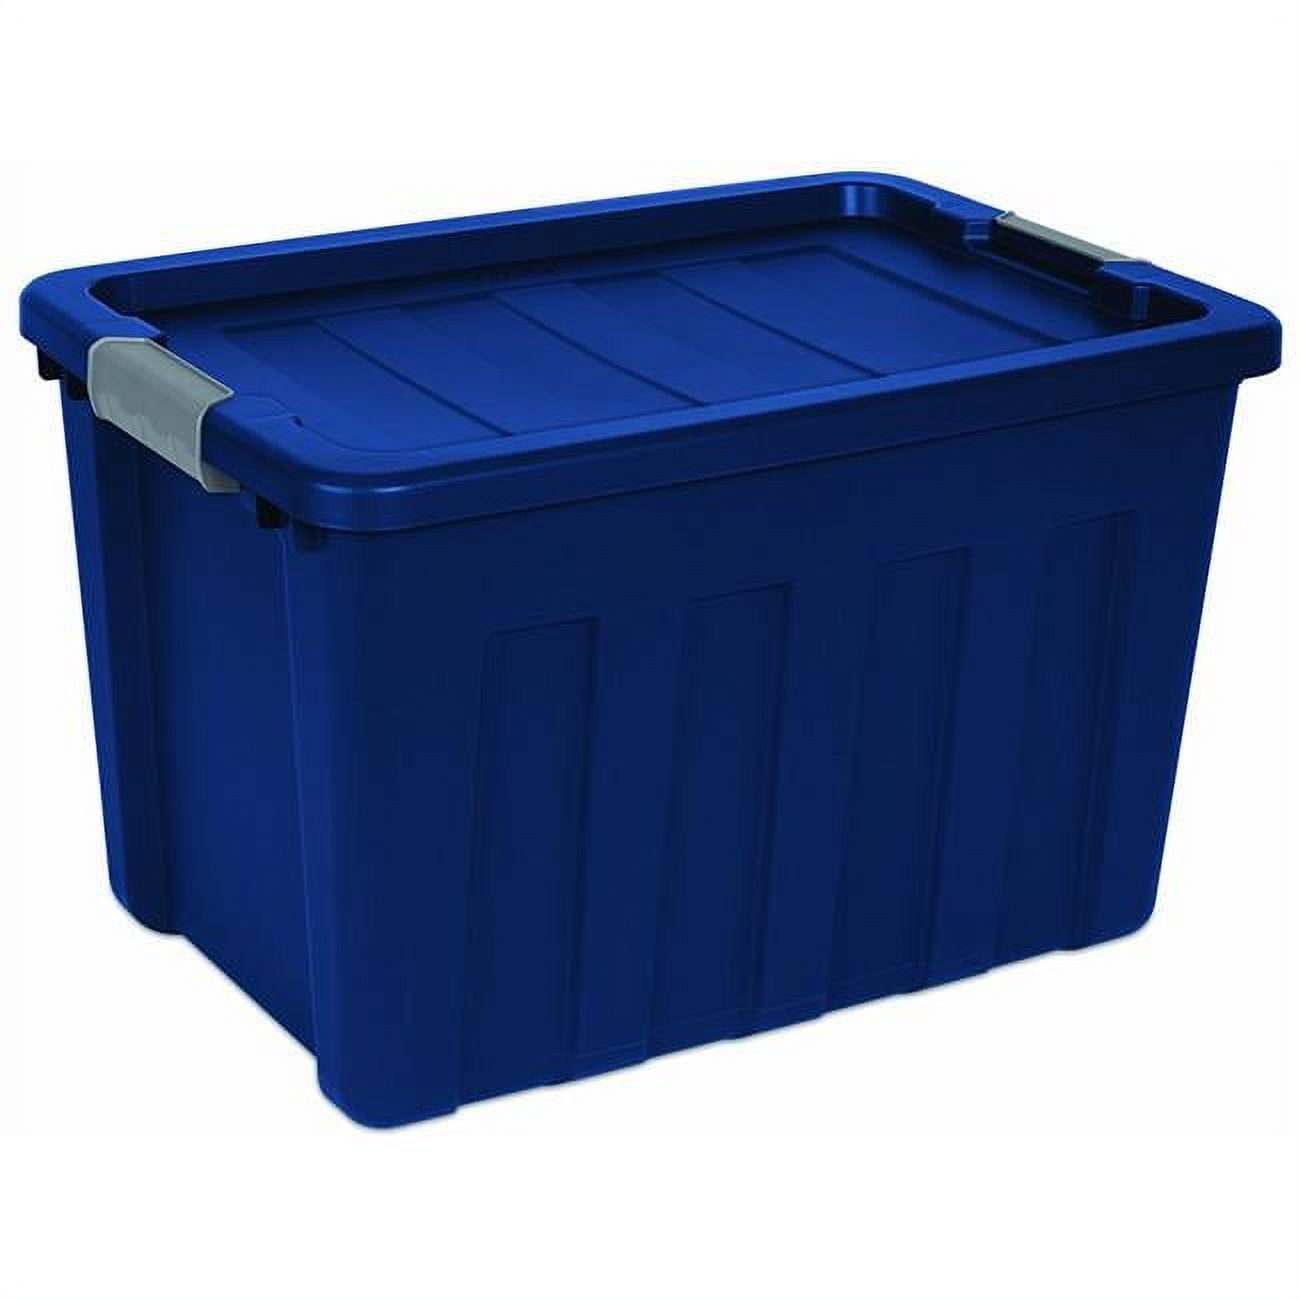 Mount It Work It Heavy Duty Plastic Storage Containers 60 Liters  BlackYellow Case Of 3 Bins - Office Depot